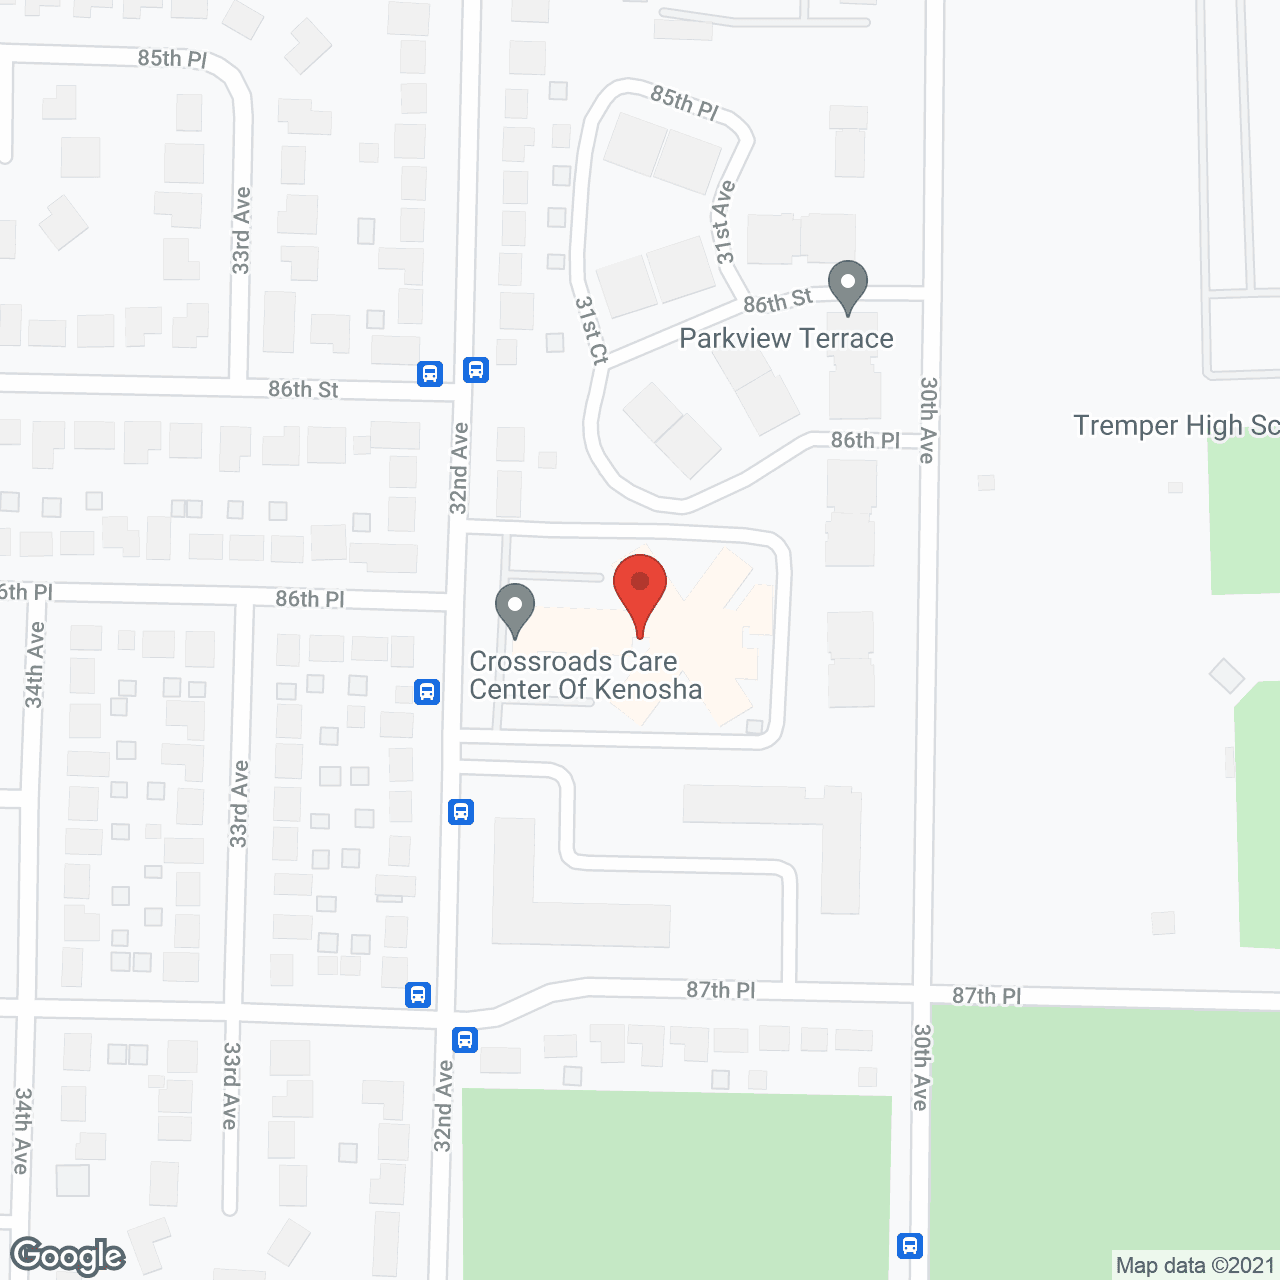 Crossroads Care Center of Kenosha in google map